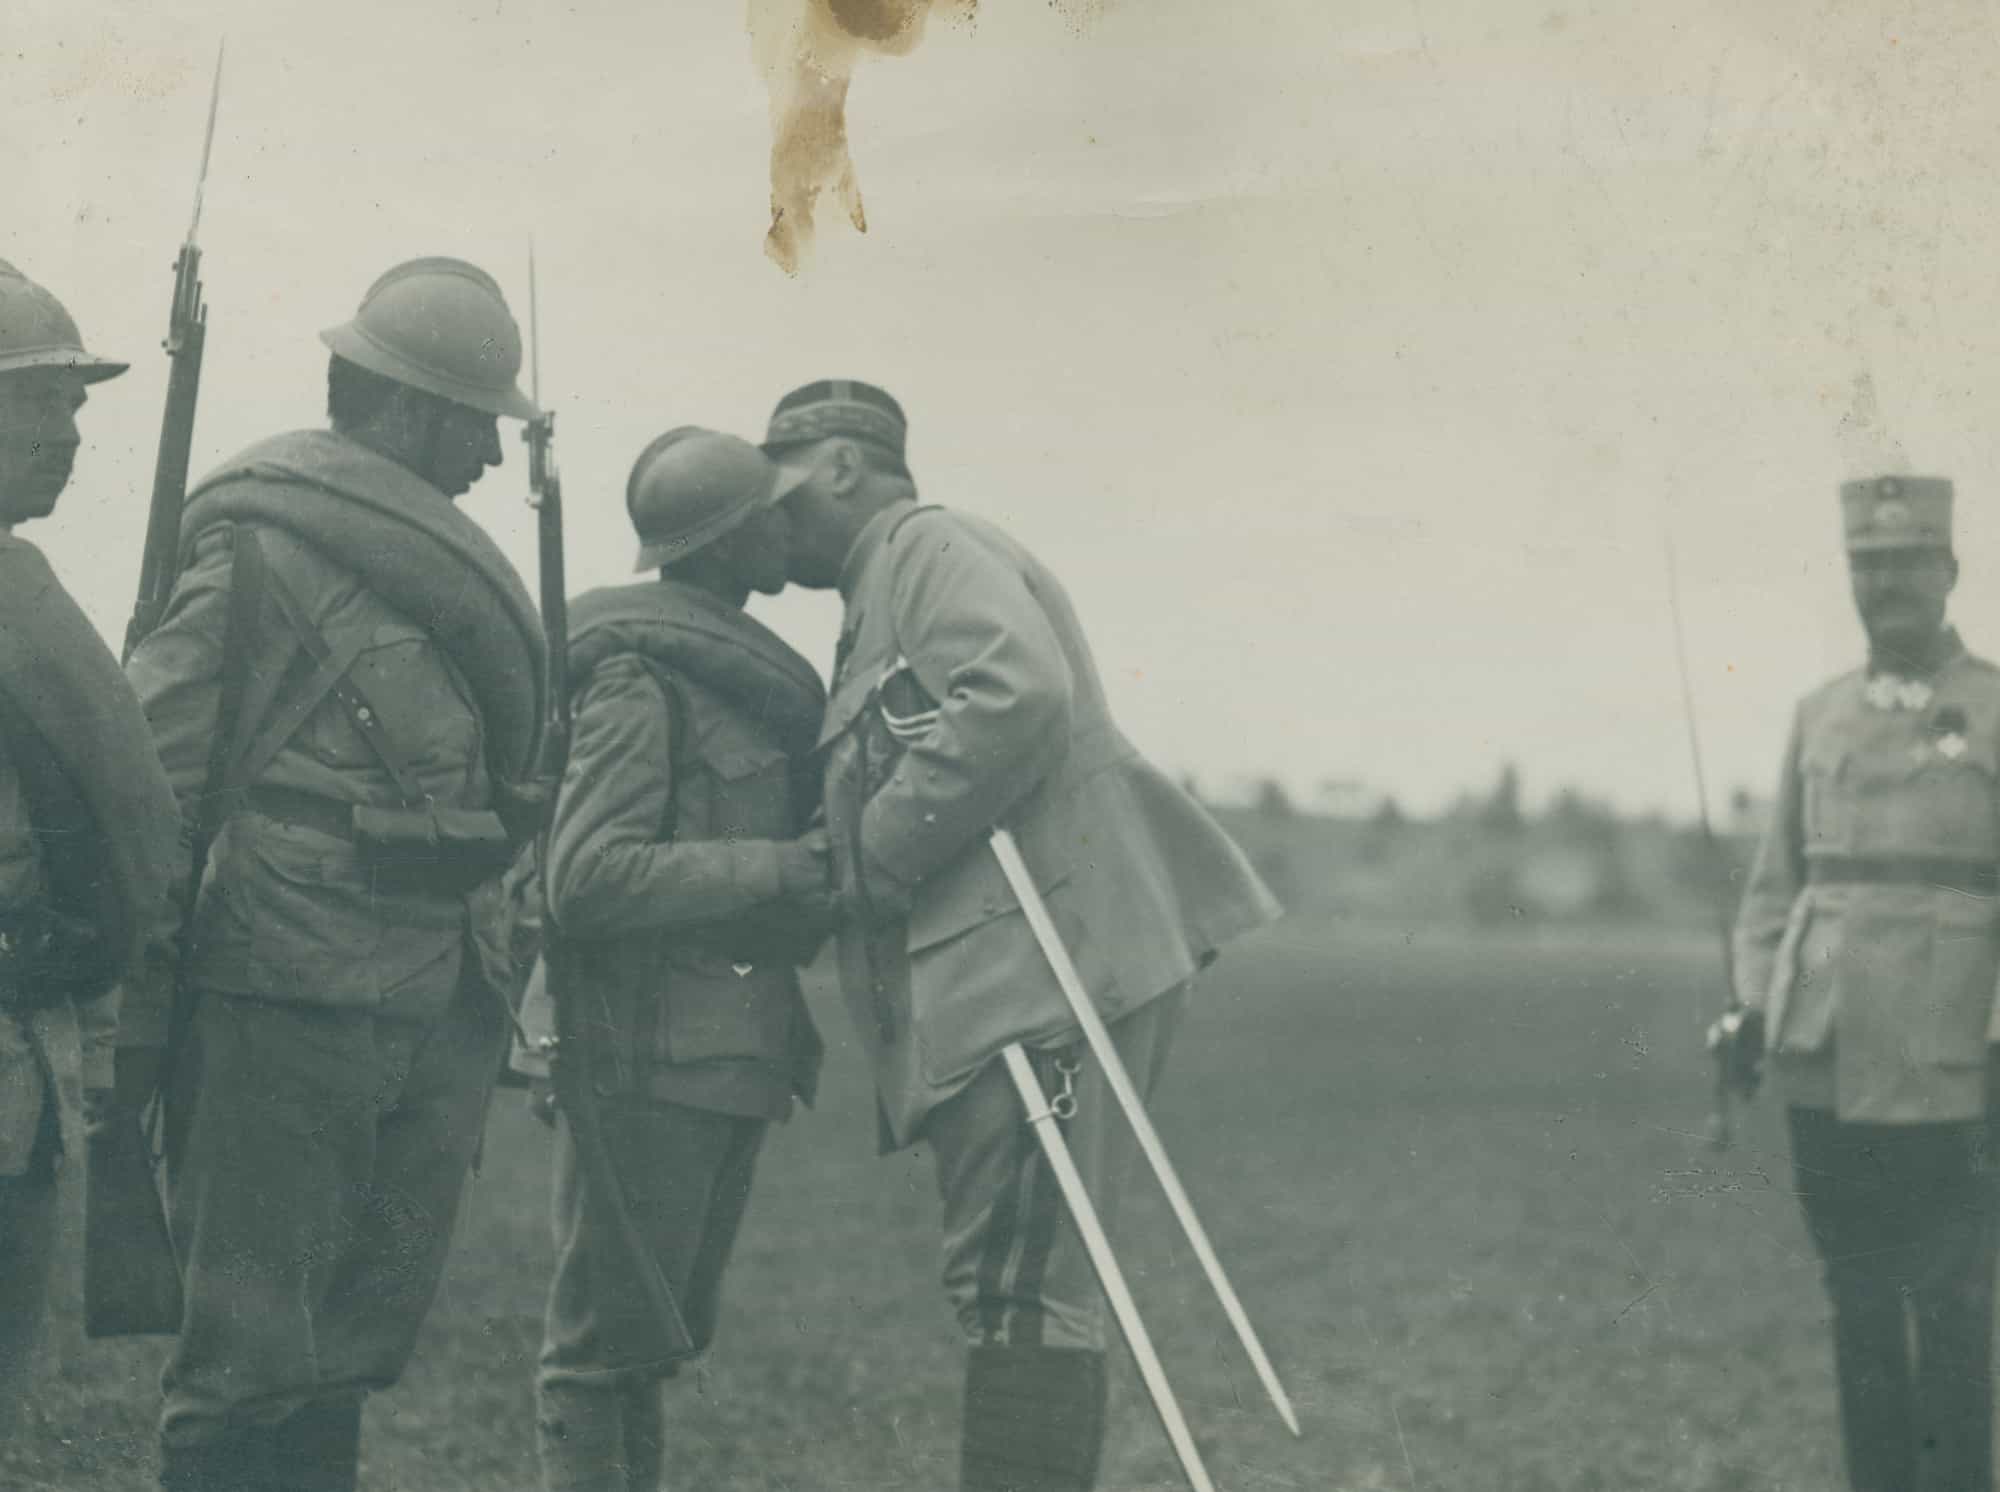 Generalul Berthelot decoreaza un sergent - 19 iunie 1917